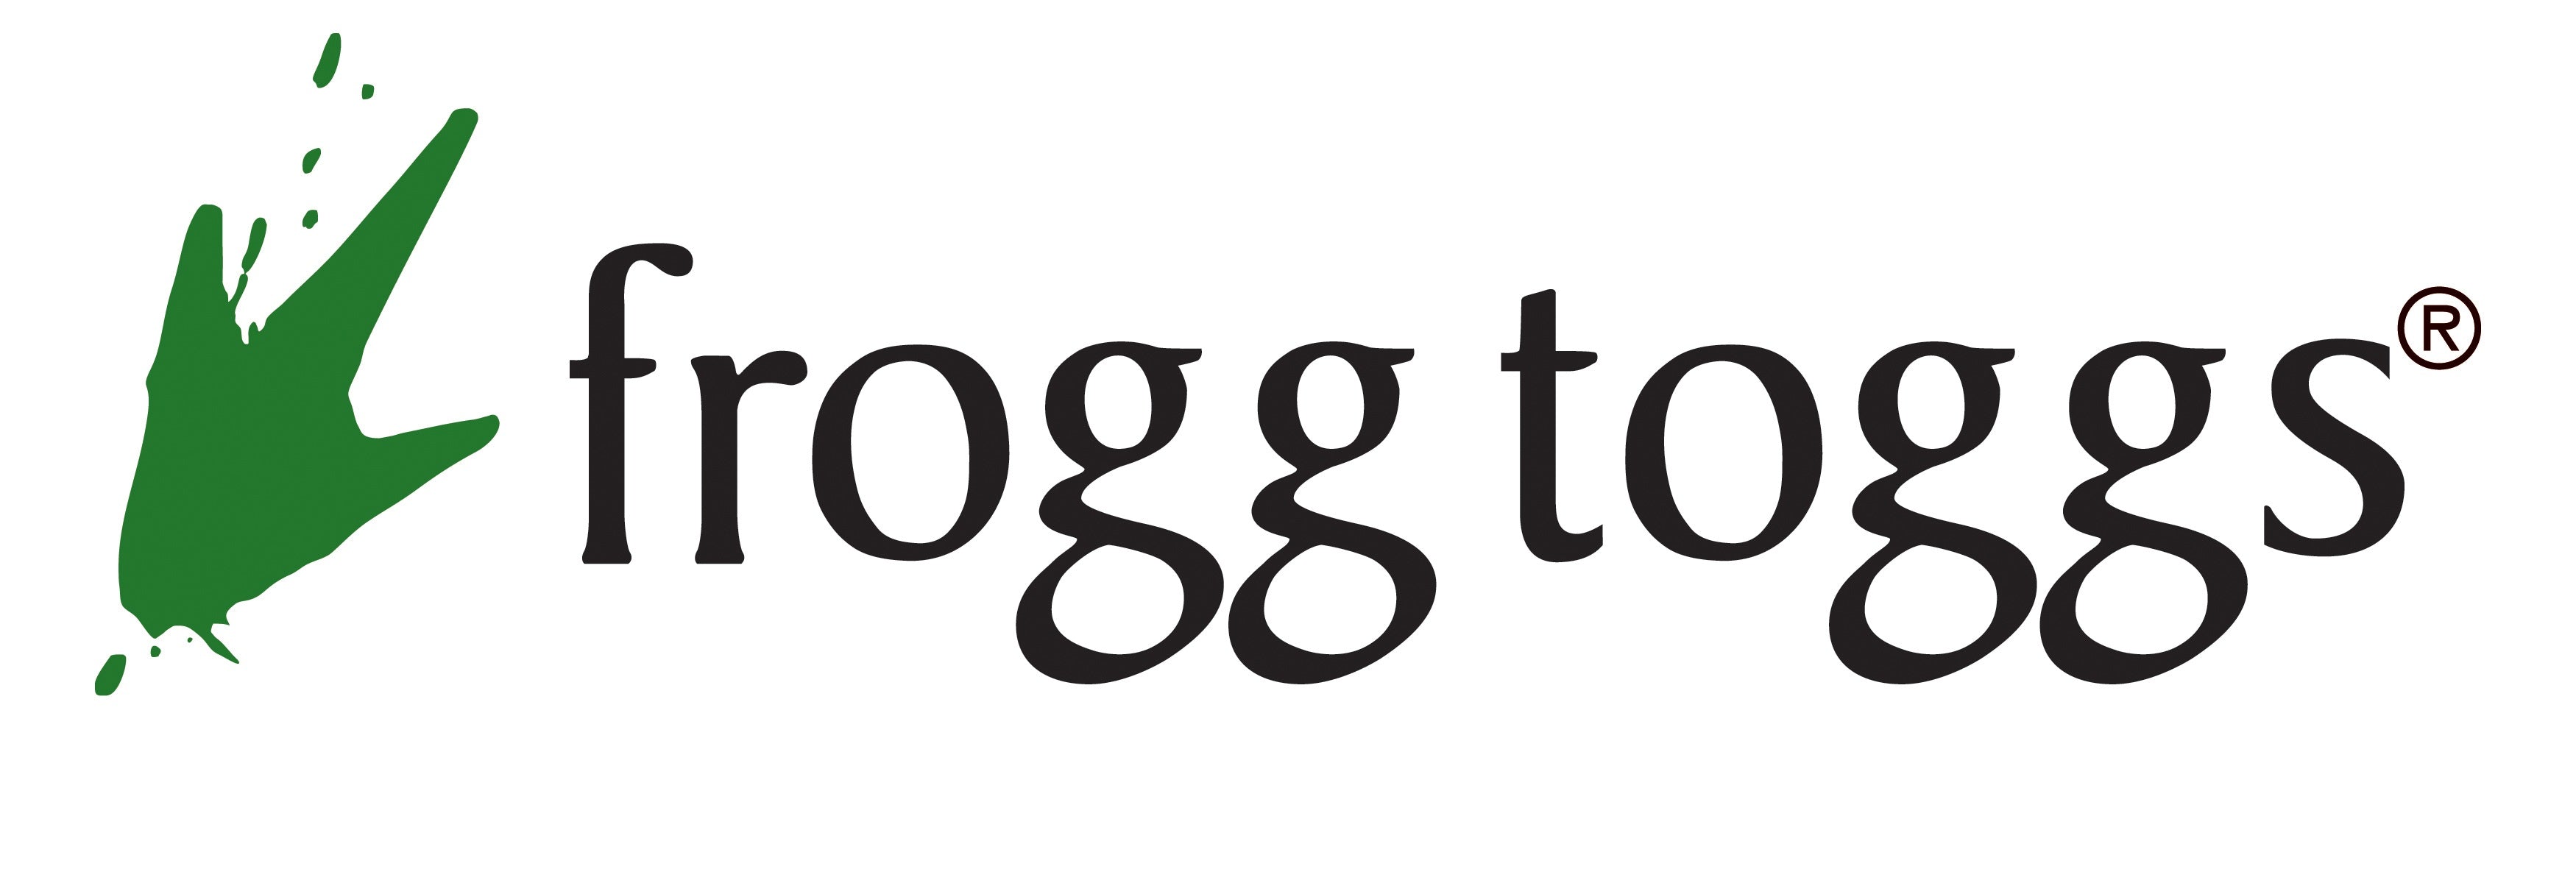 -froggtoggs-logo-whitebackground.jpg